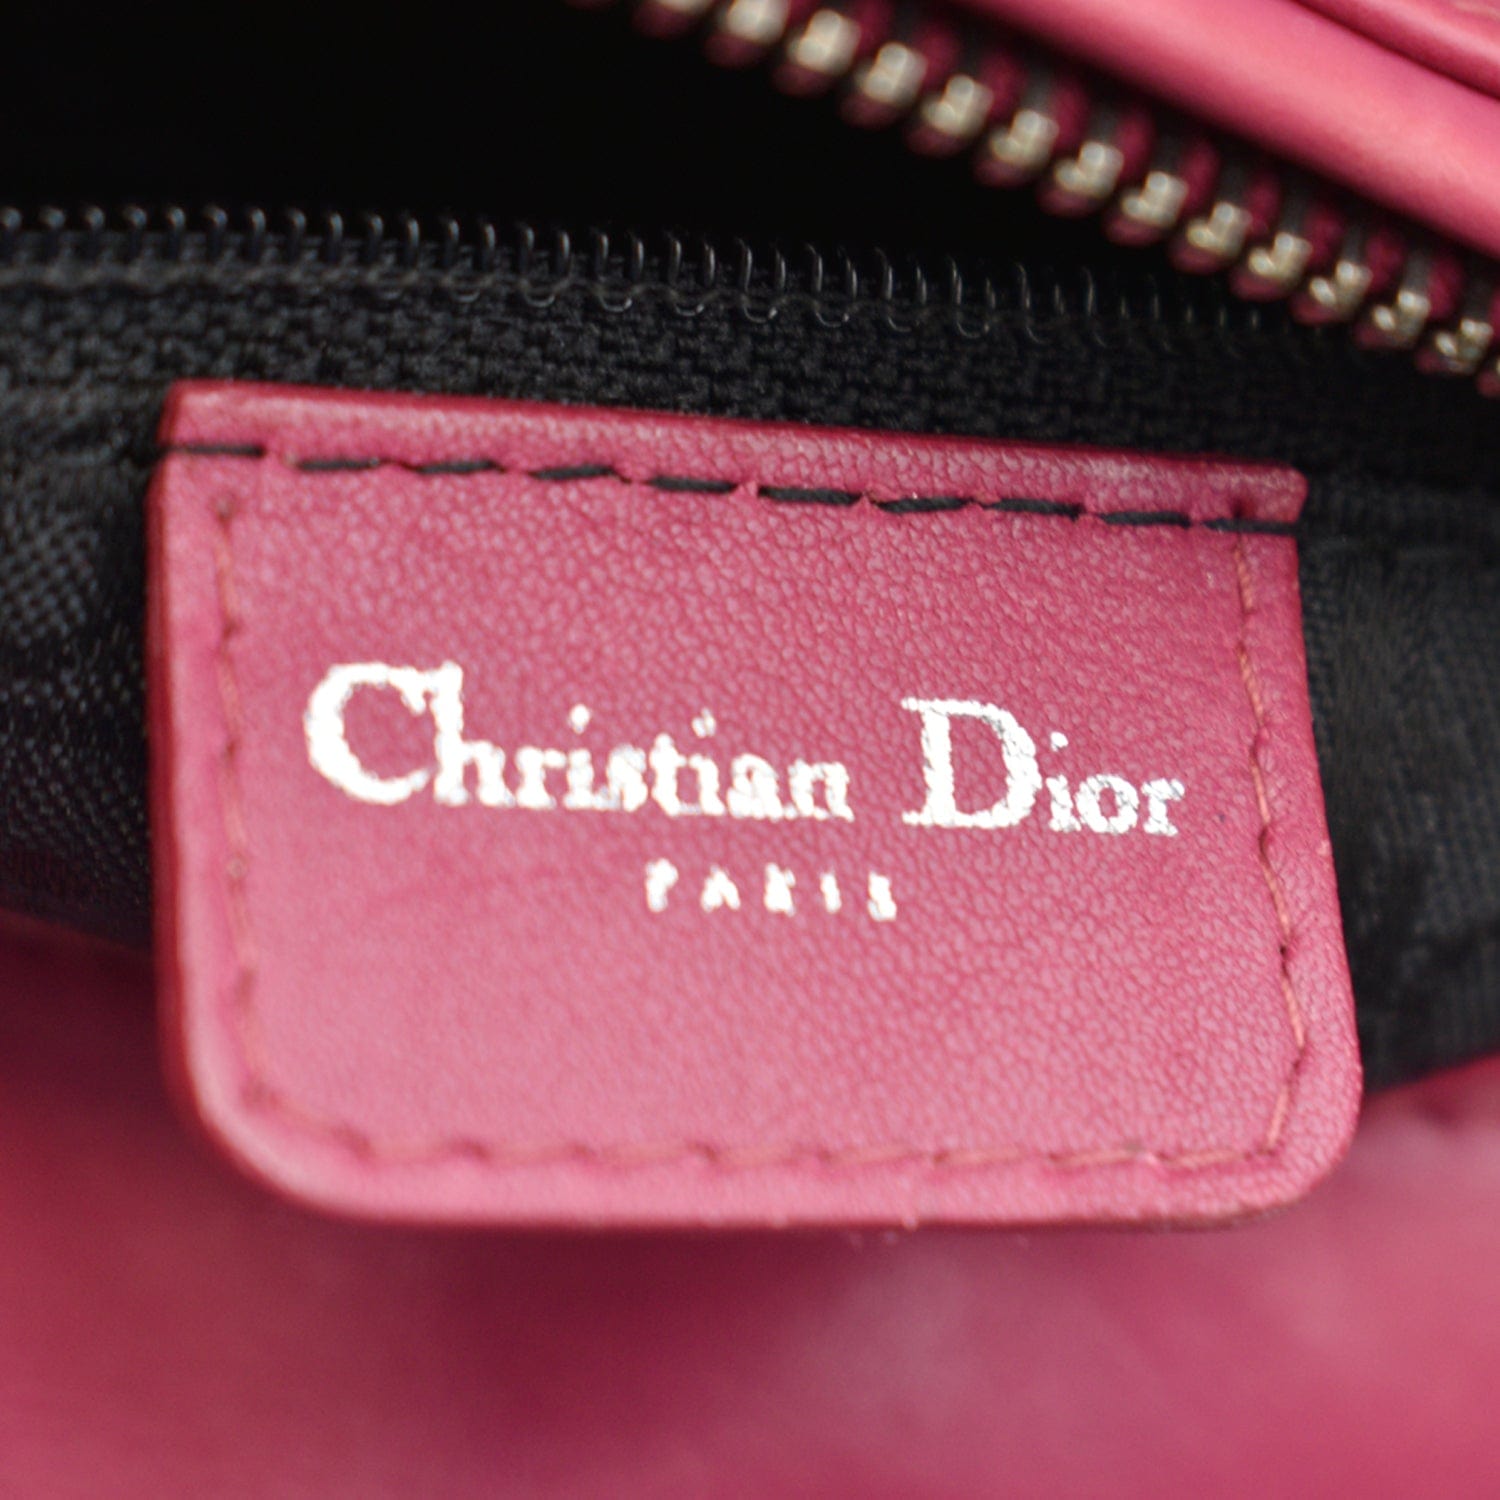 christian dior tote bag pink